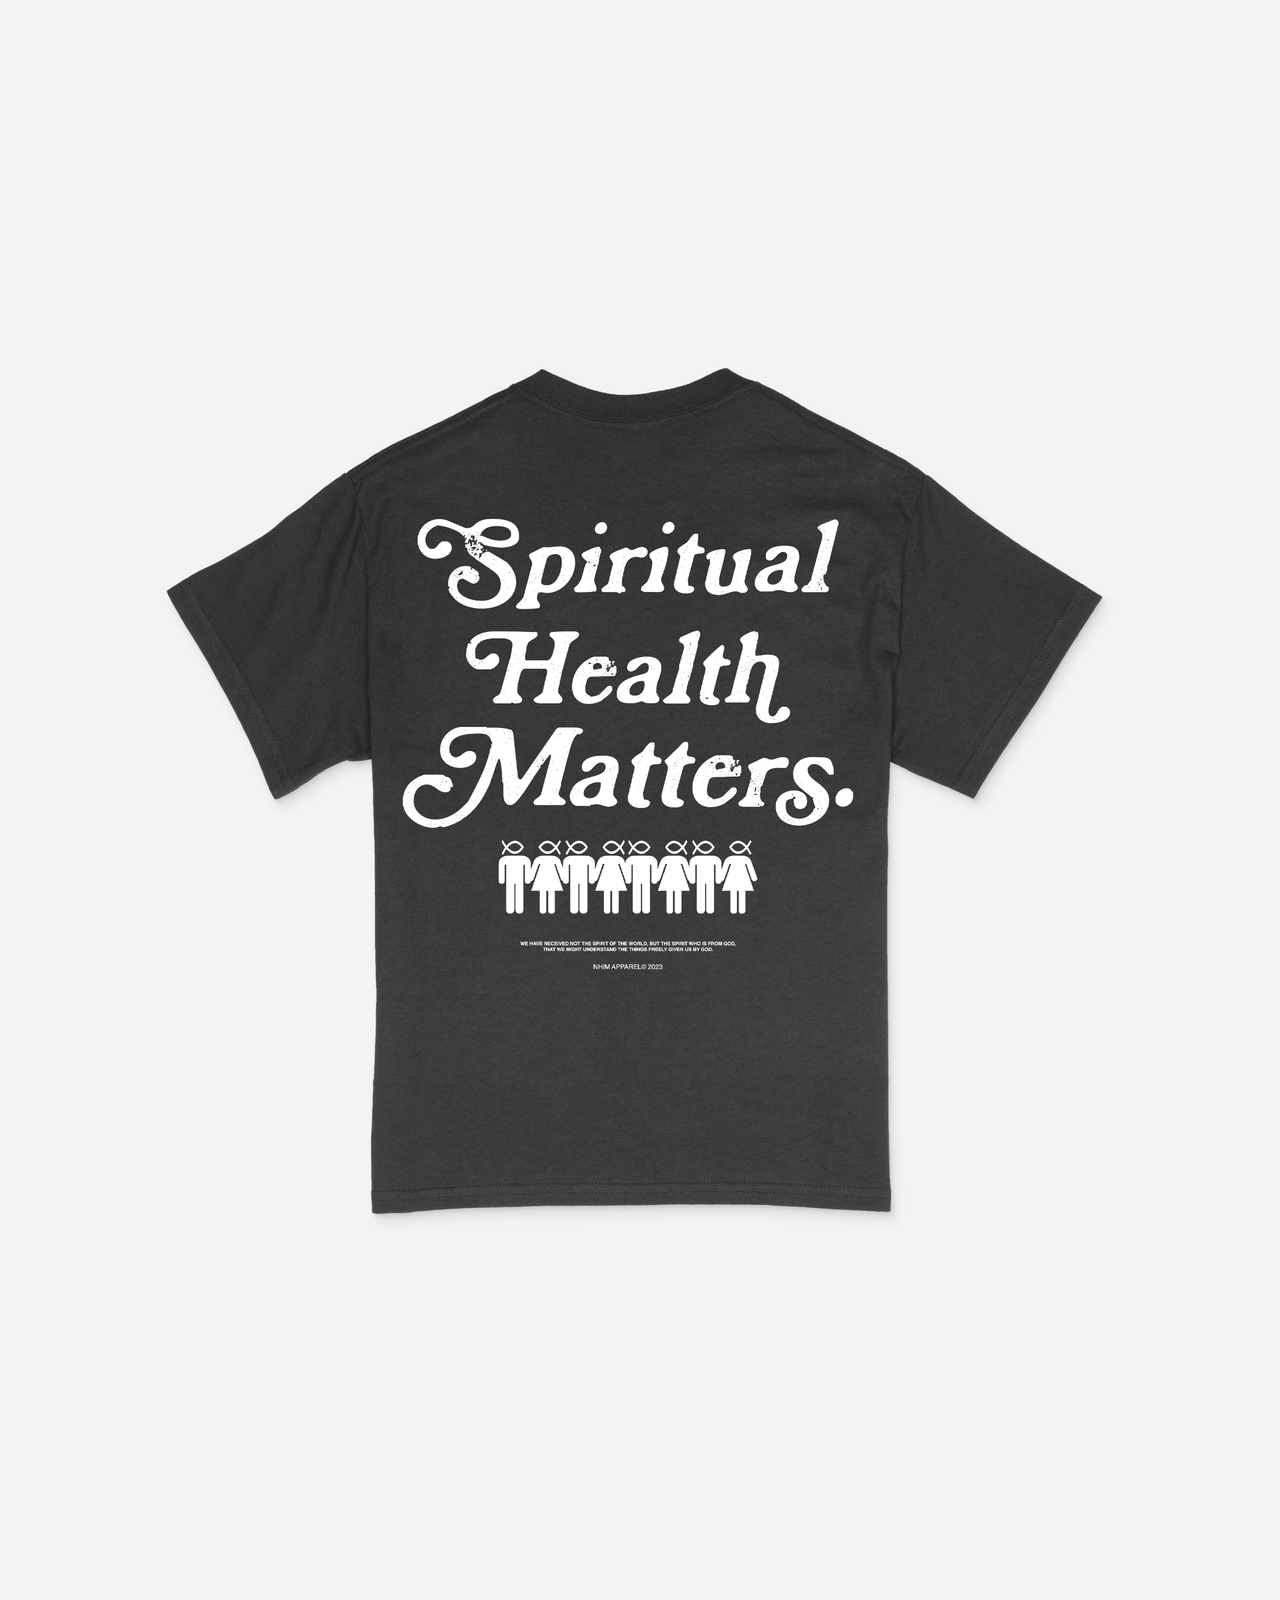 Christian t shirt. Spiritual Health Matters black t shirt. NHiM Apparel Christian Clothing Company. Made in the USA.